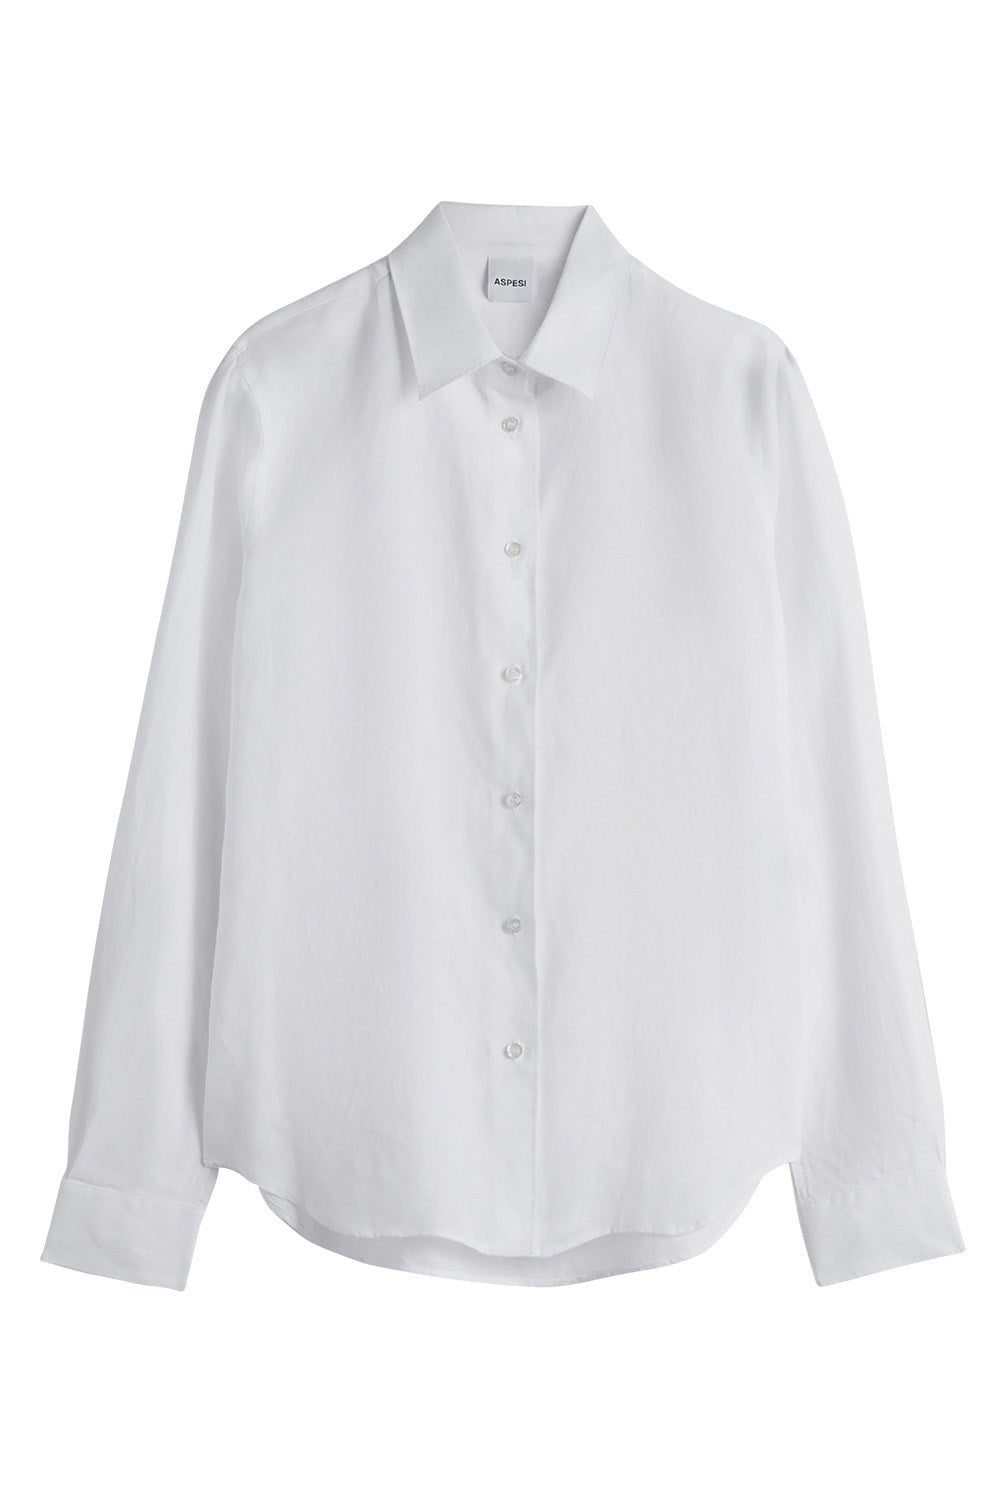 ASPESI-Long Sleeve Button Shirt - White-